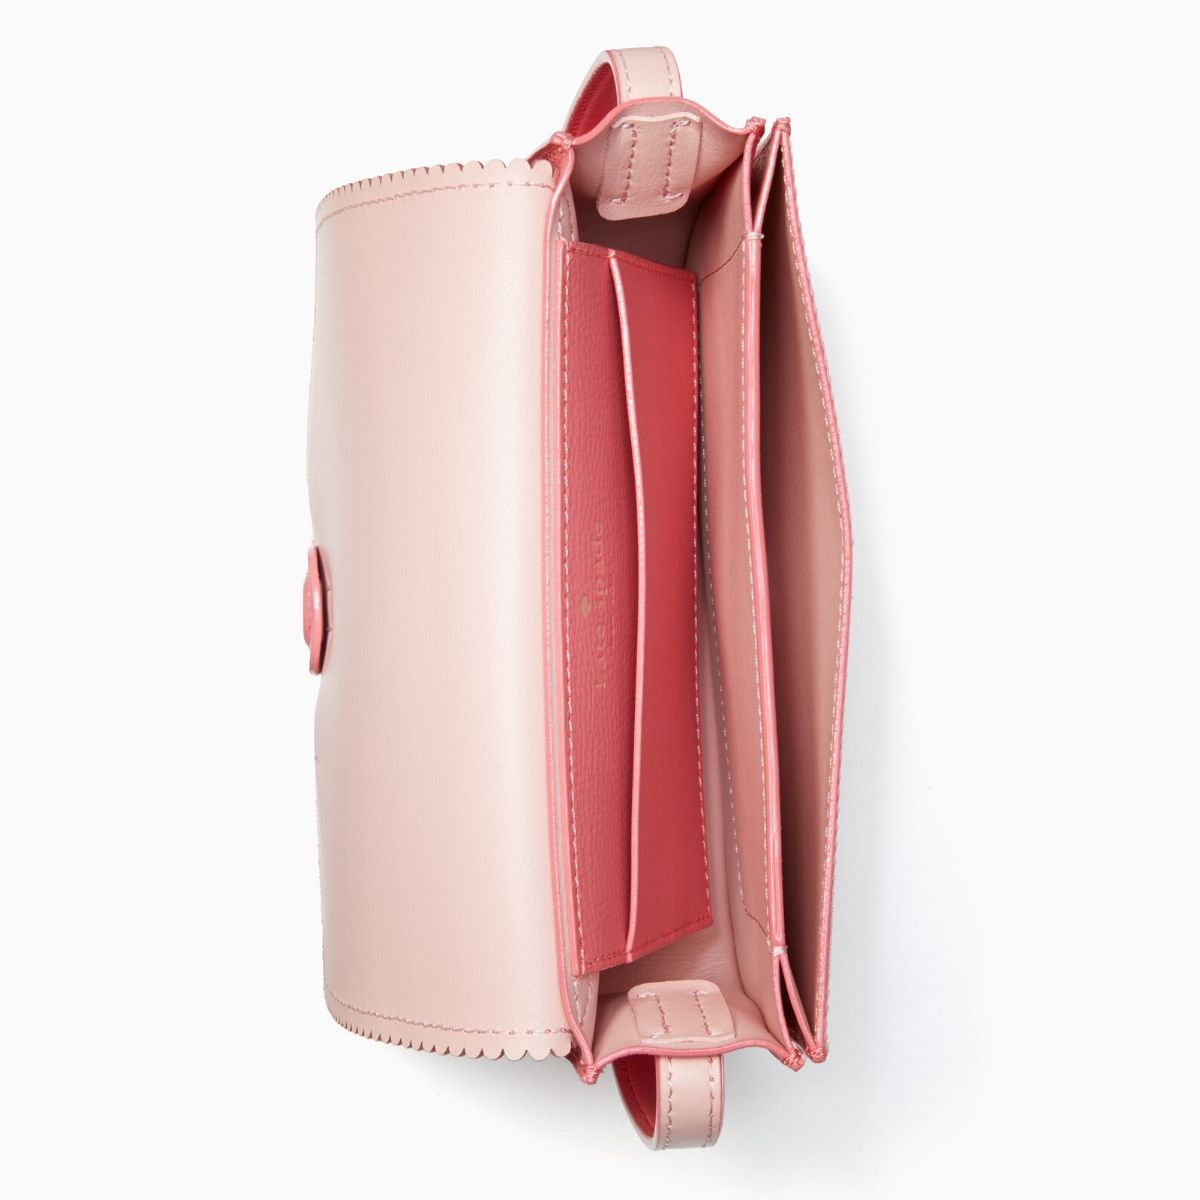 Kate Spade Pink Crossbody Bag – The Turn